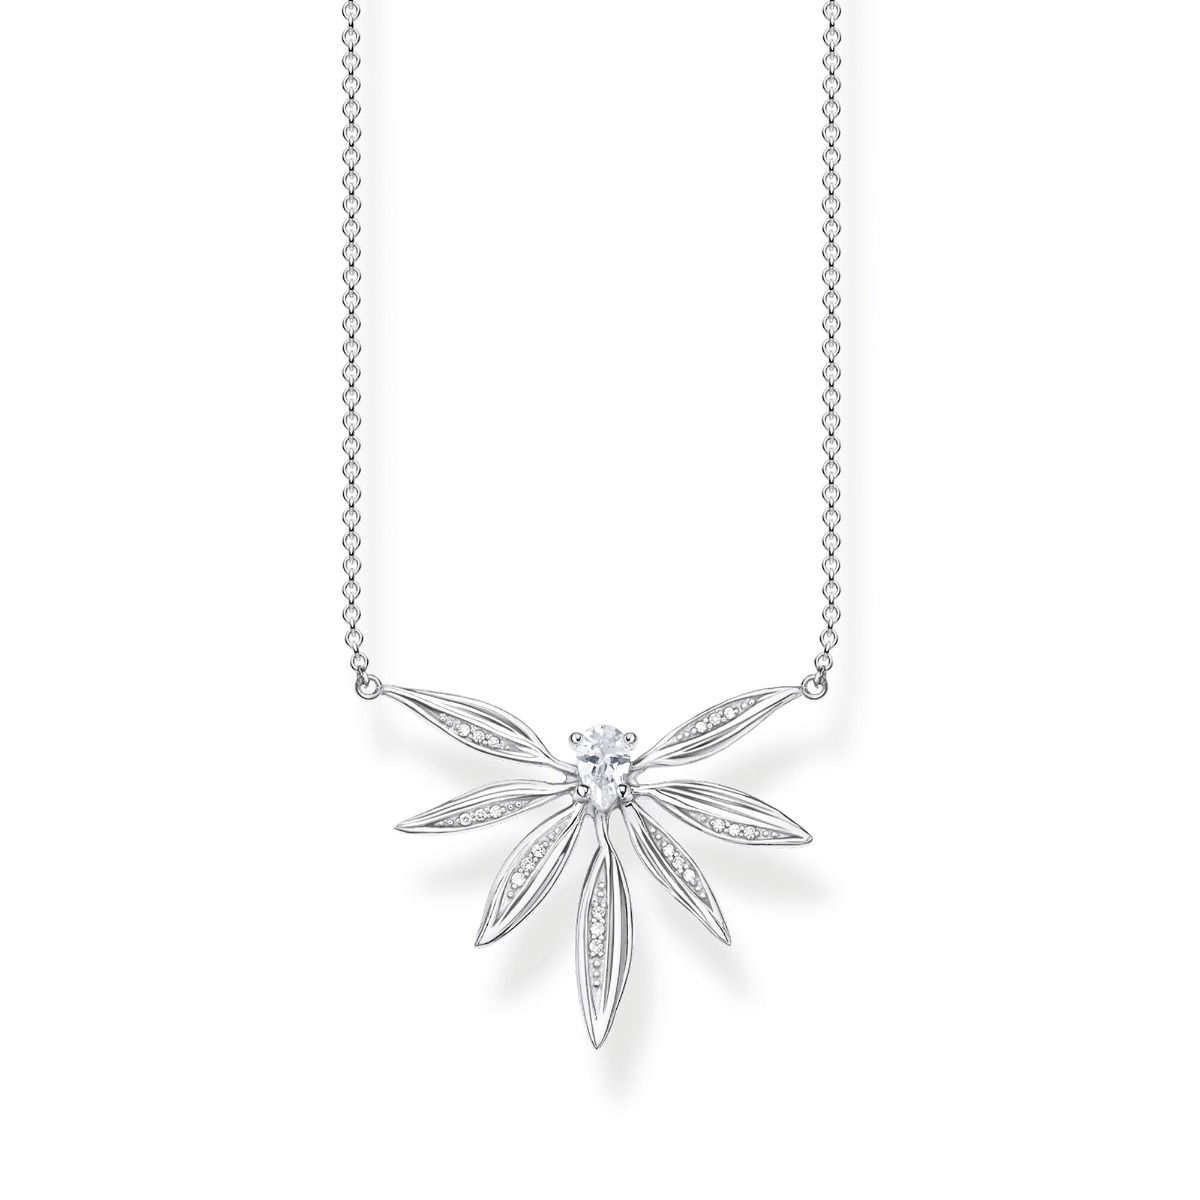 Thomas Sabo silver leaf necklace